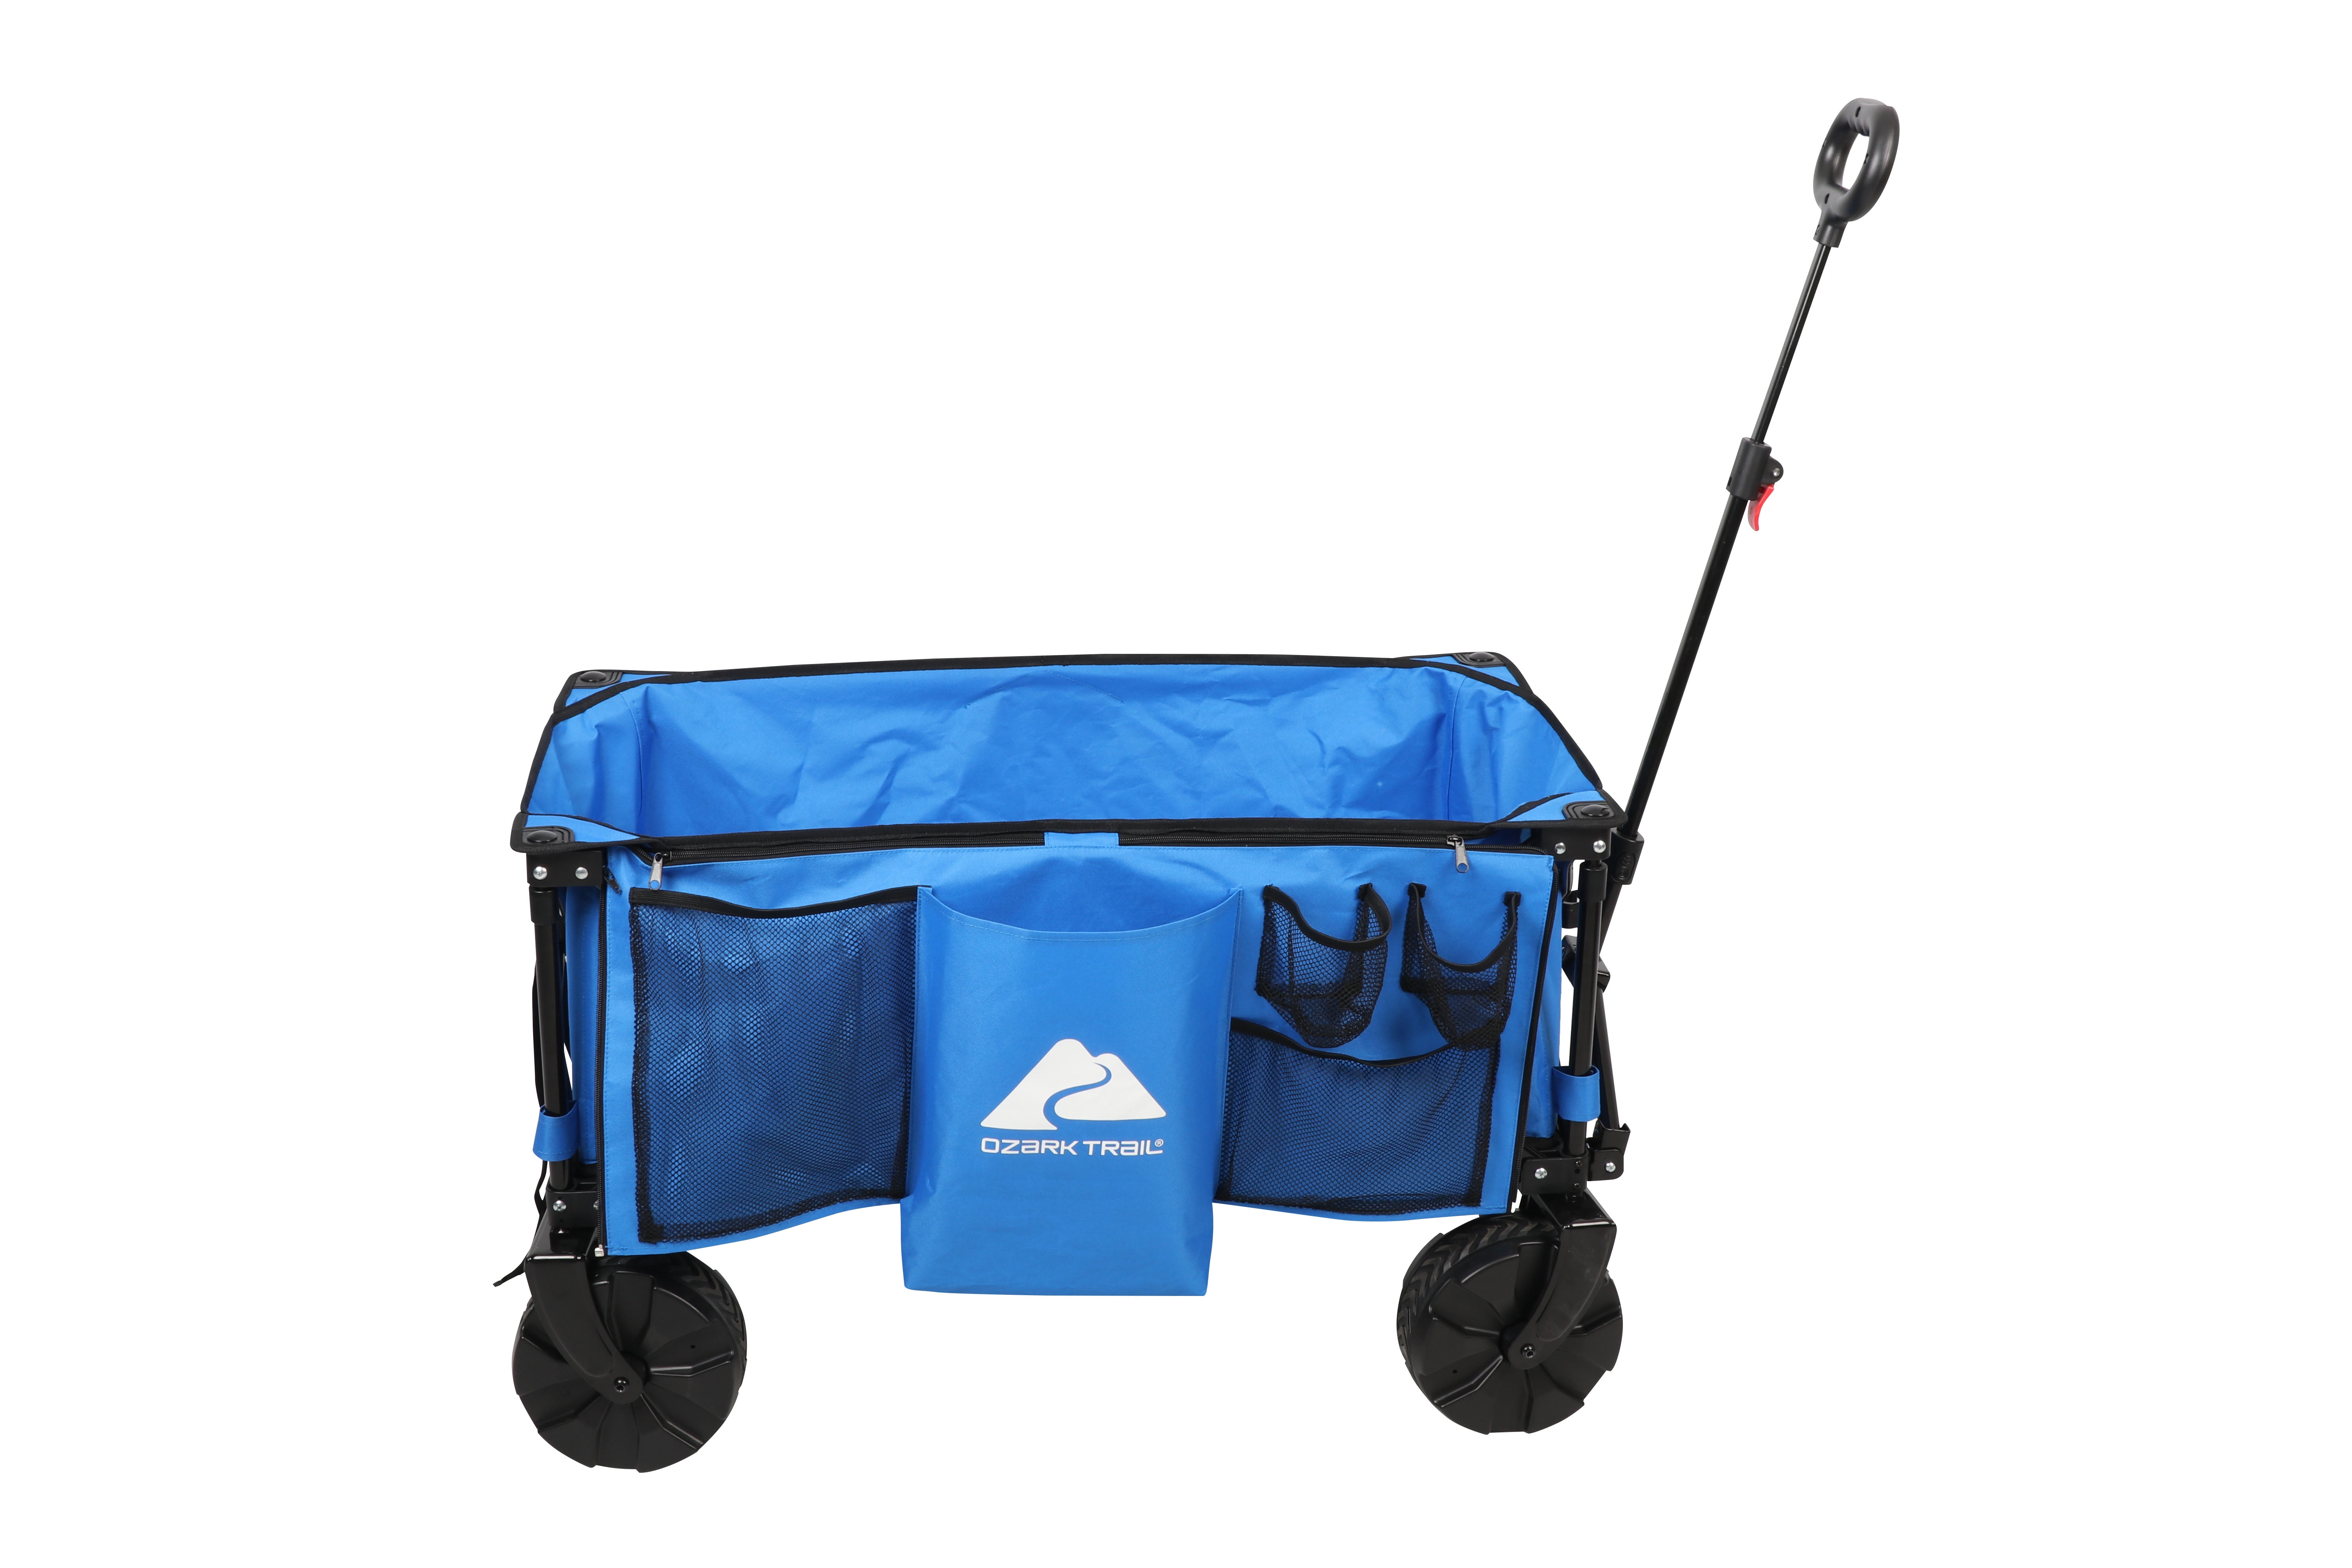 Wagon Folding Cart Oversized Wheels All Terrain Camping Beach Outdoor Tailgate 